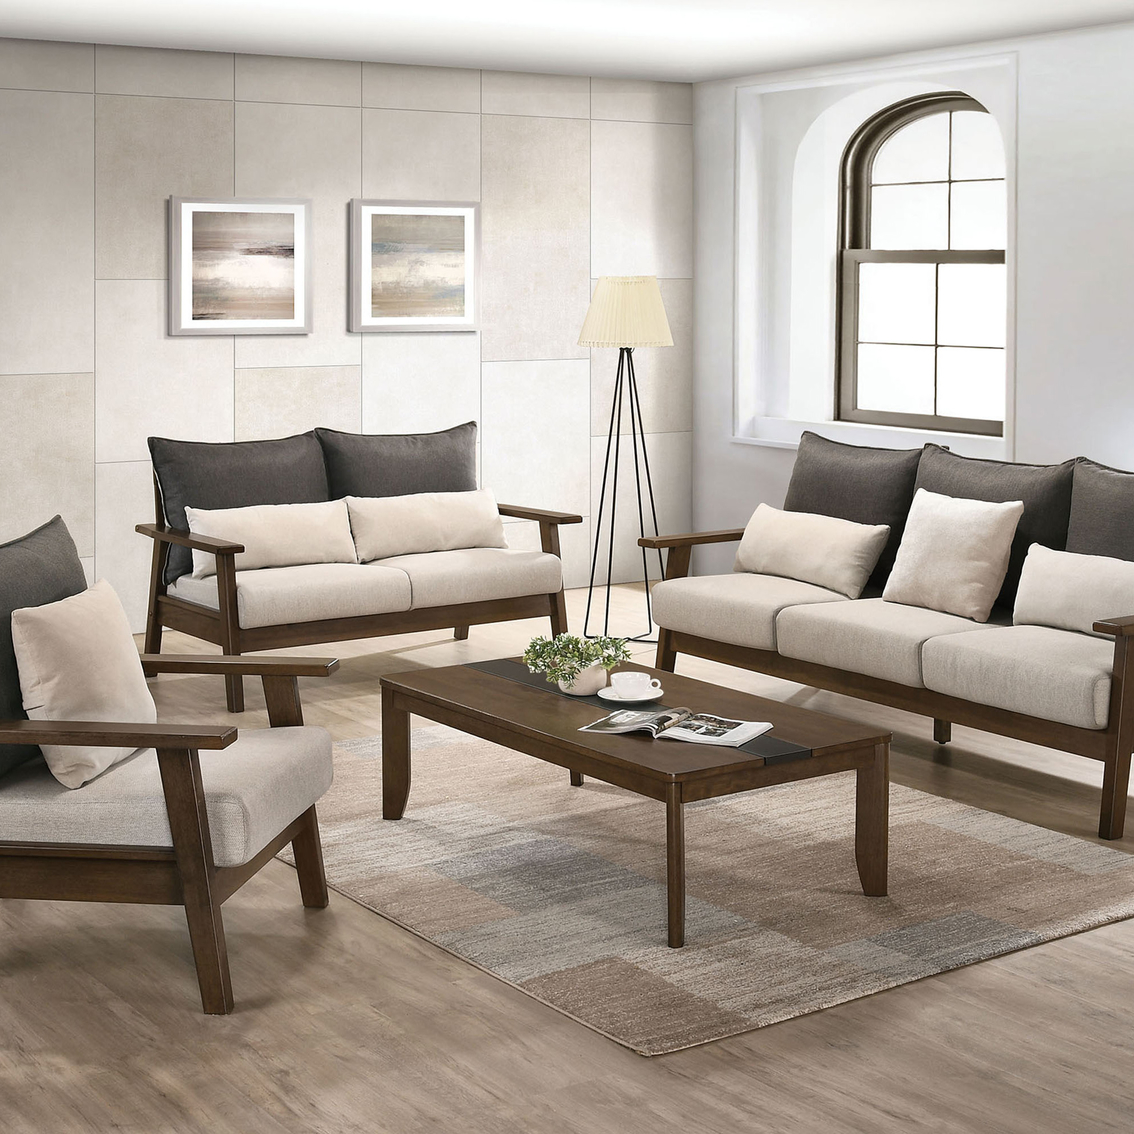 Furniture of America Louis Sofa - Image 2 of 2